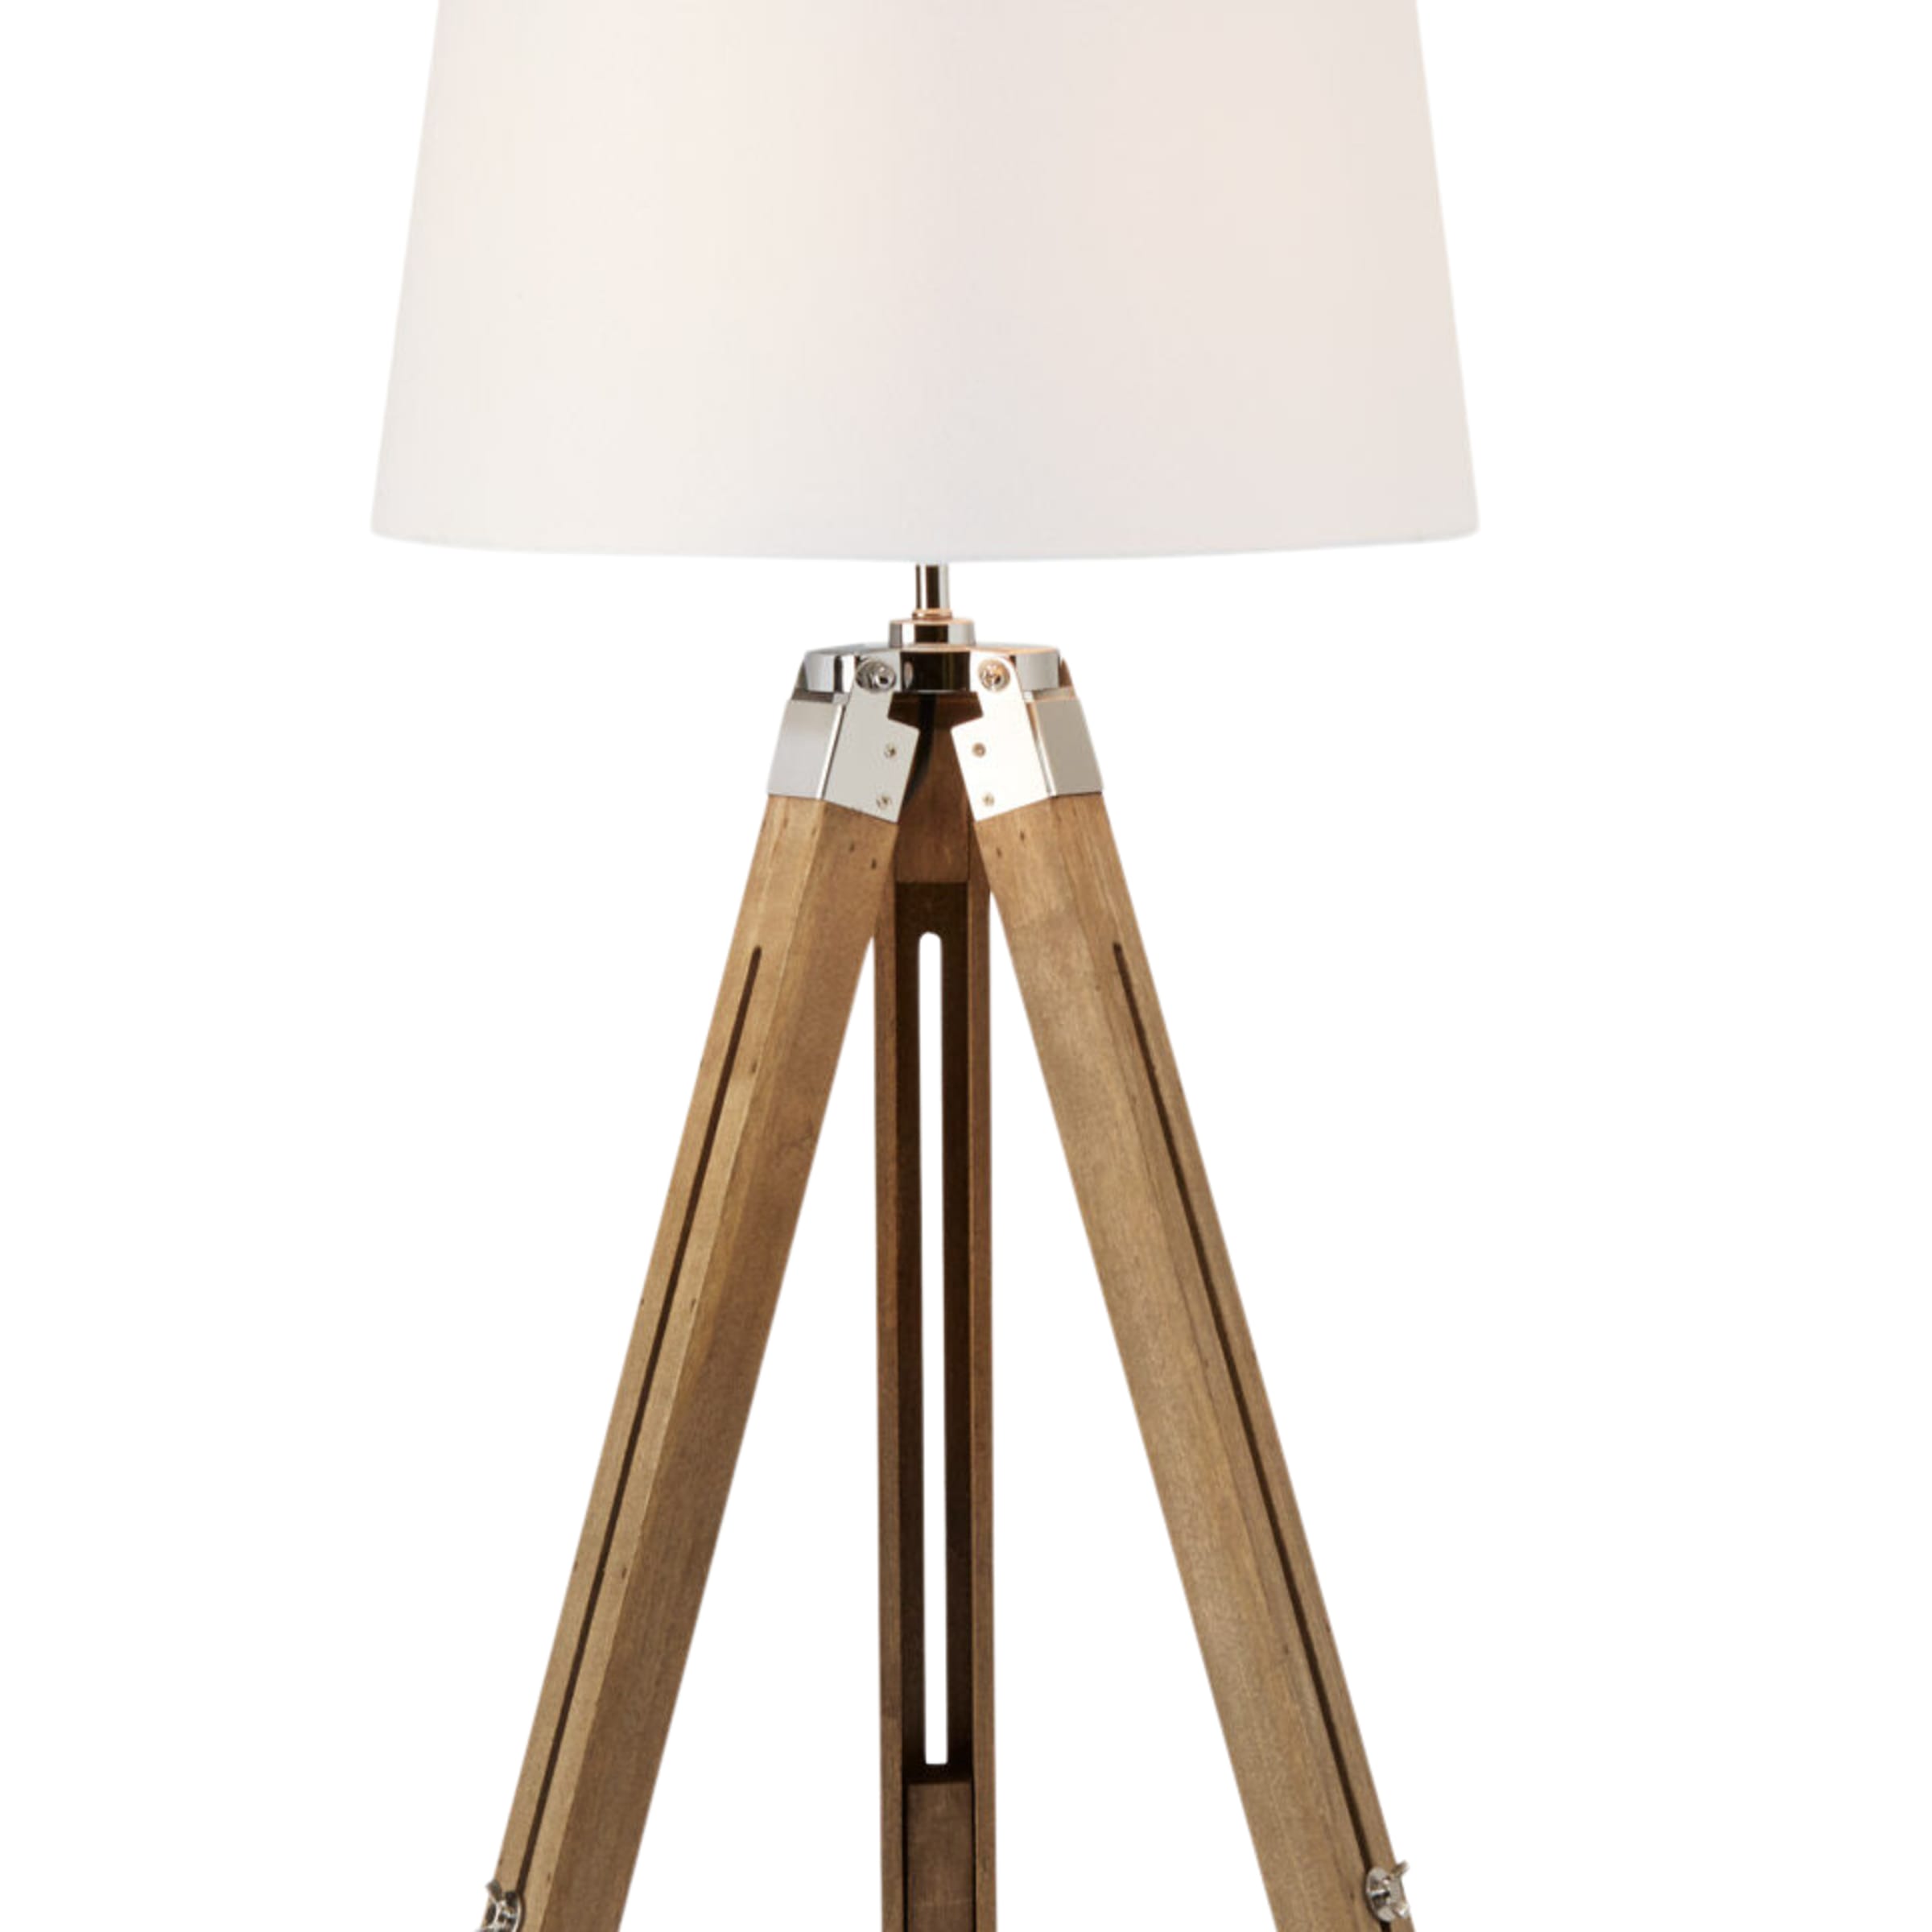 Wooden Tripod Floor Lamp Bouclair Com, Alpine Tripod Table Lamp